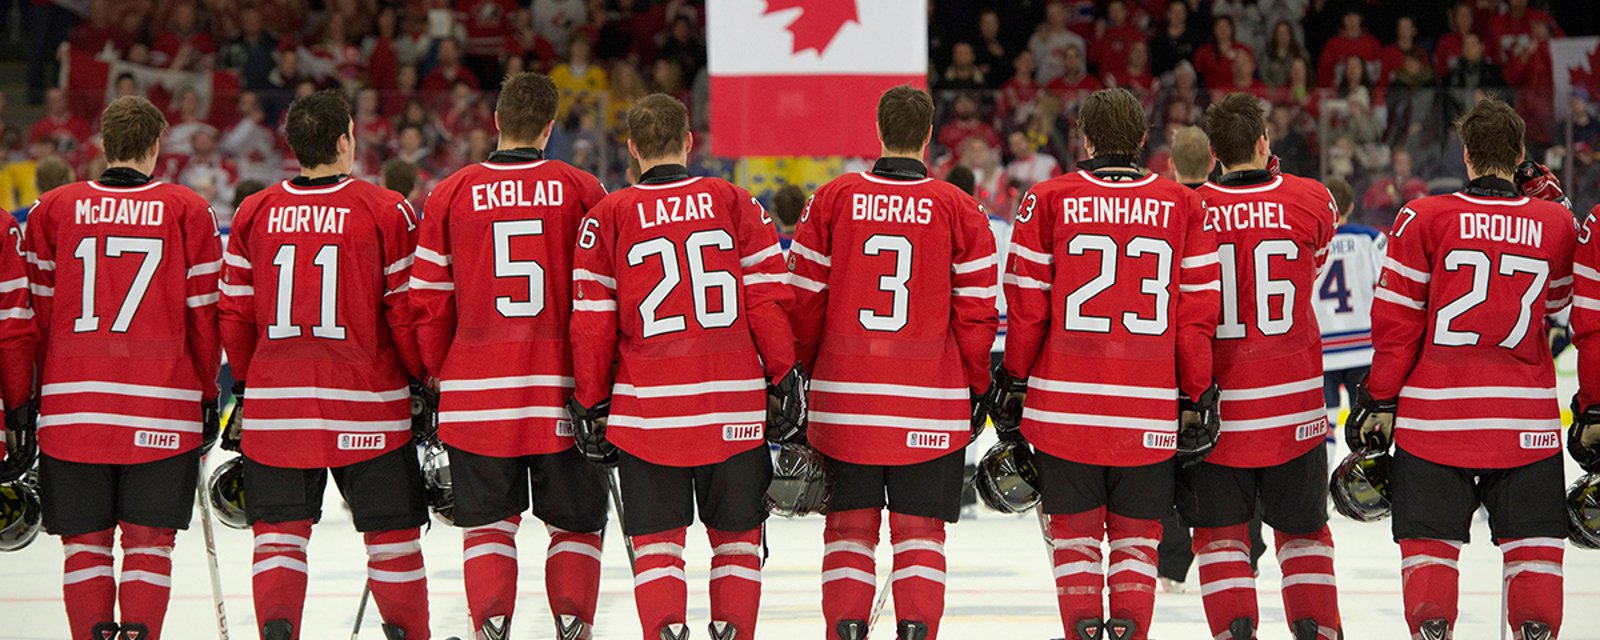 Breaking: Canadian NHL city chosen as host of 2021 World Juniors!